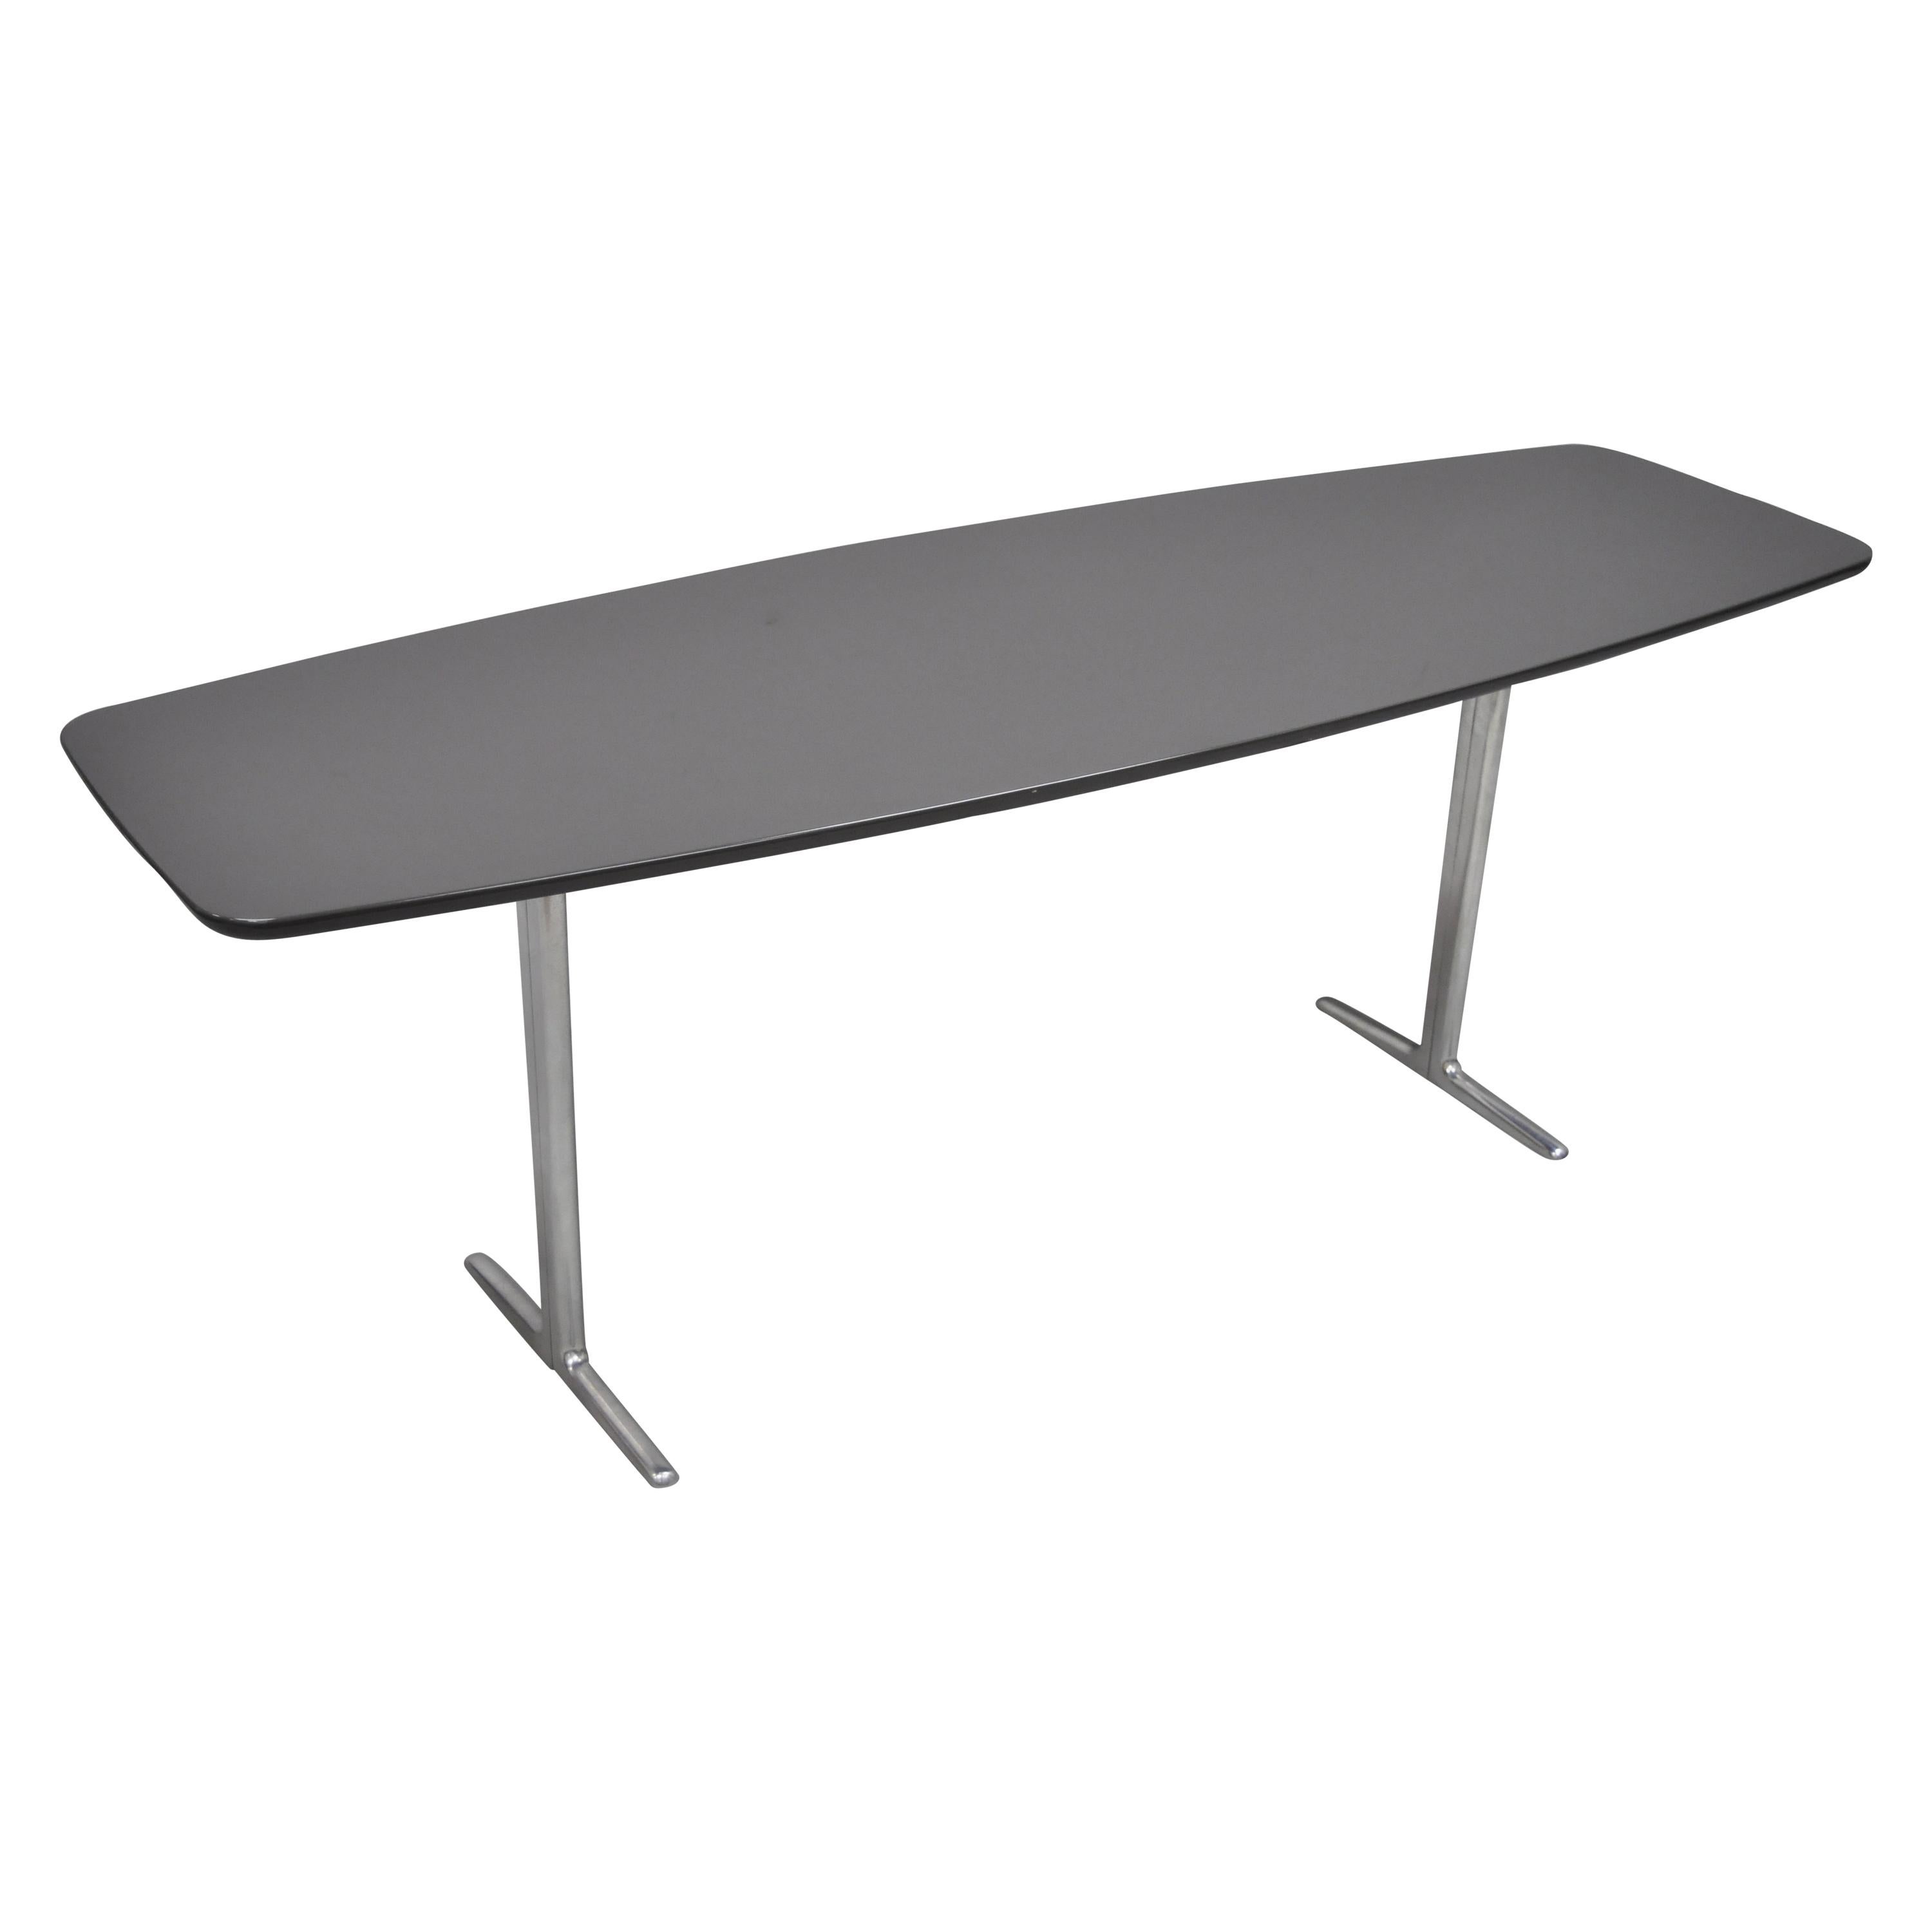 Designer Minotti Italian Modern Surfboard Coffee Table with Steel Legs